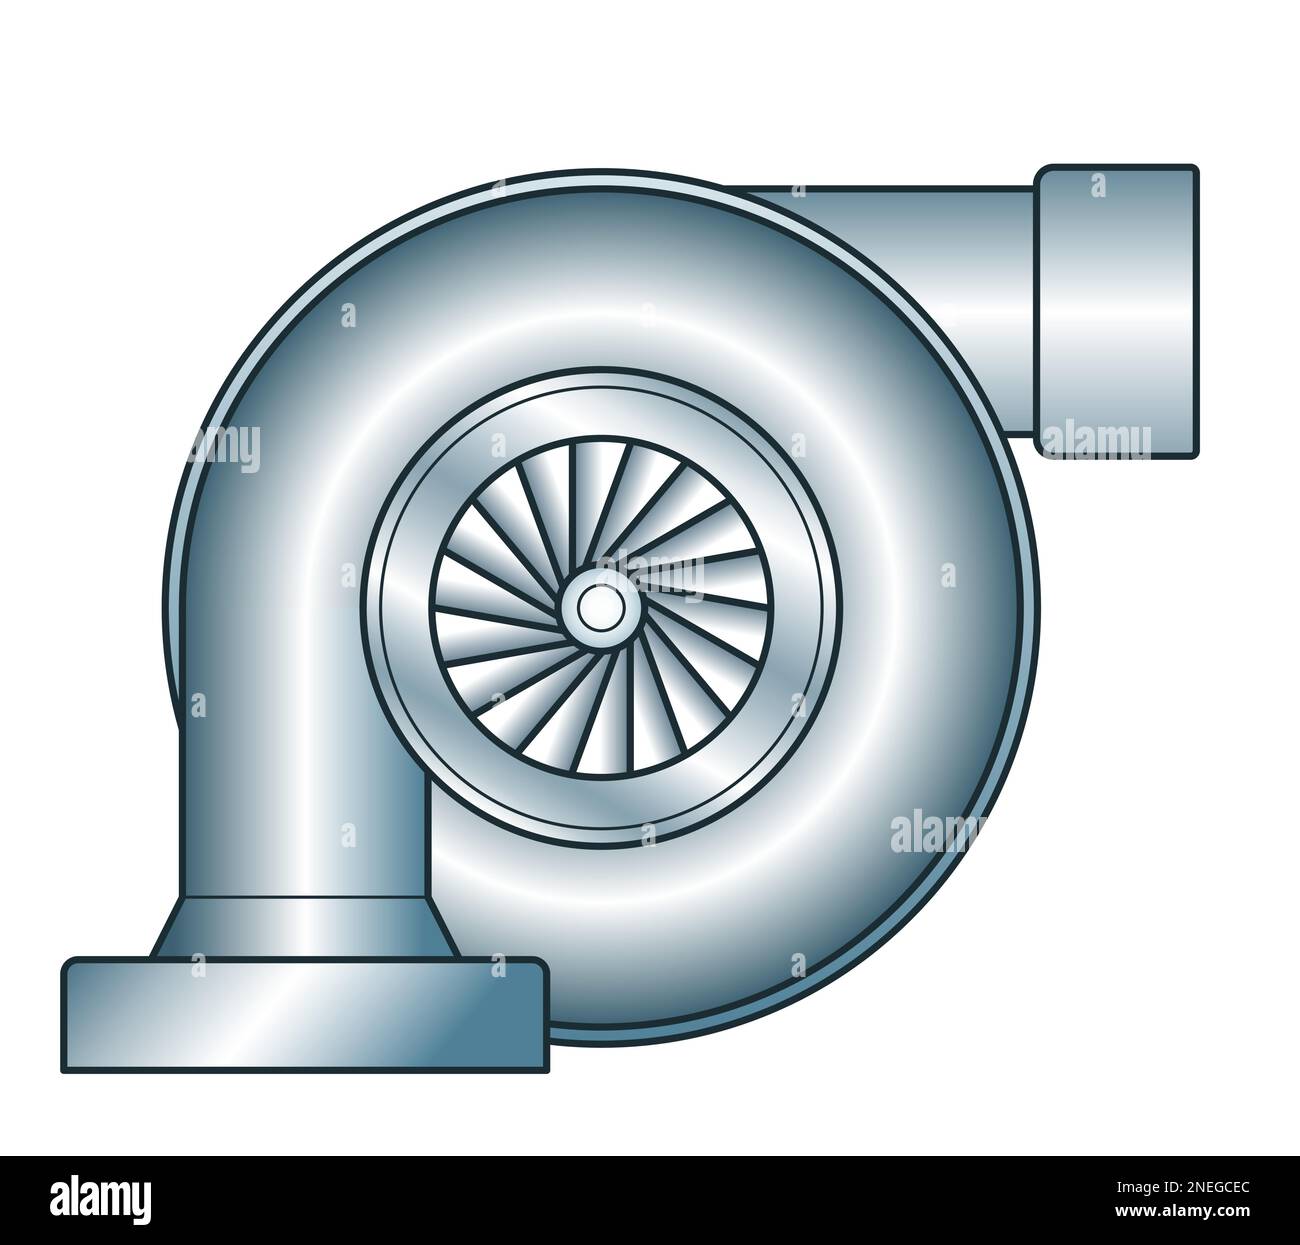 Illustration of dynamic axisymmetric centrifugal compressor Stock Vector